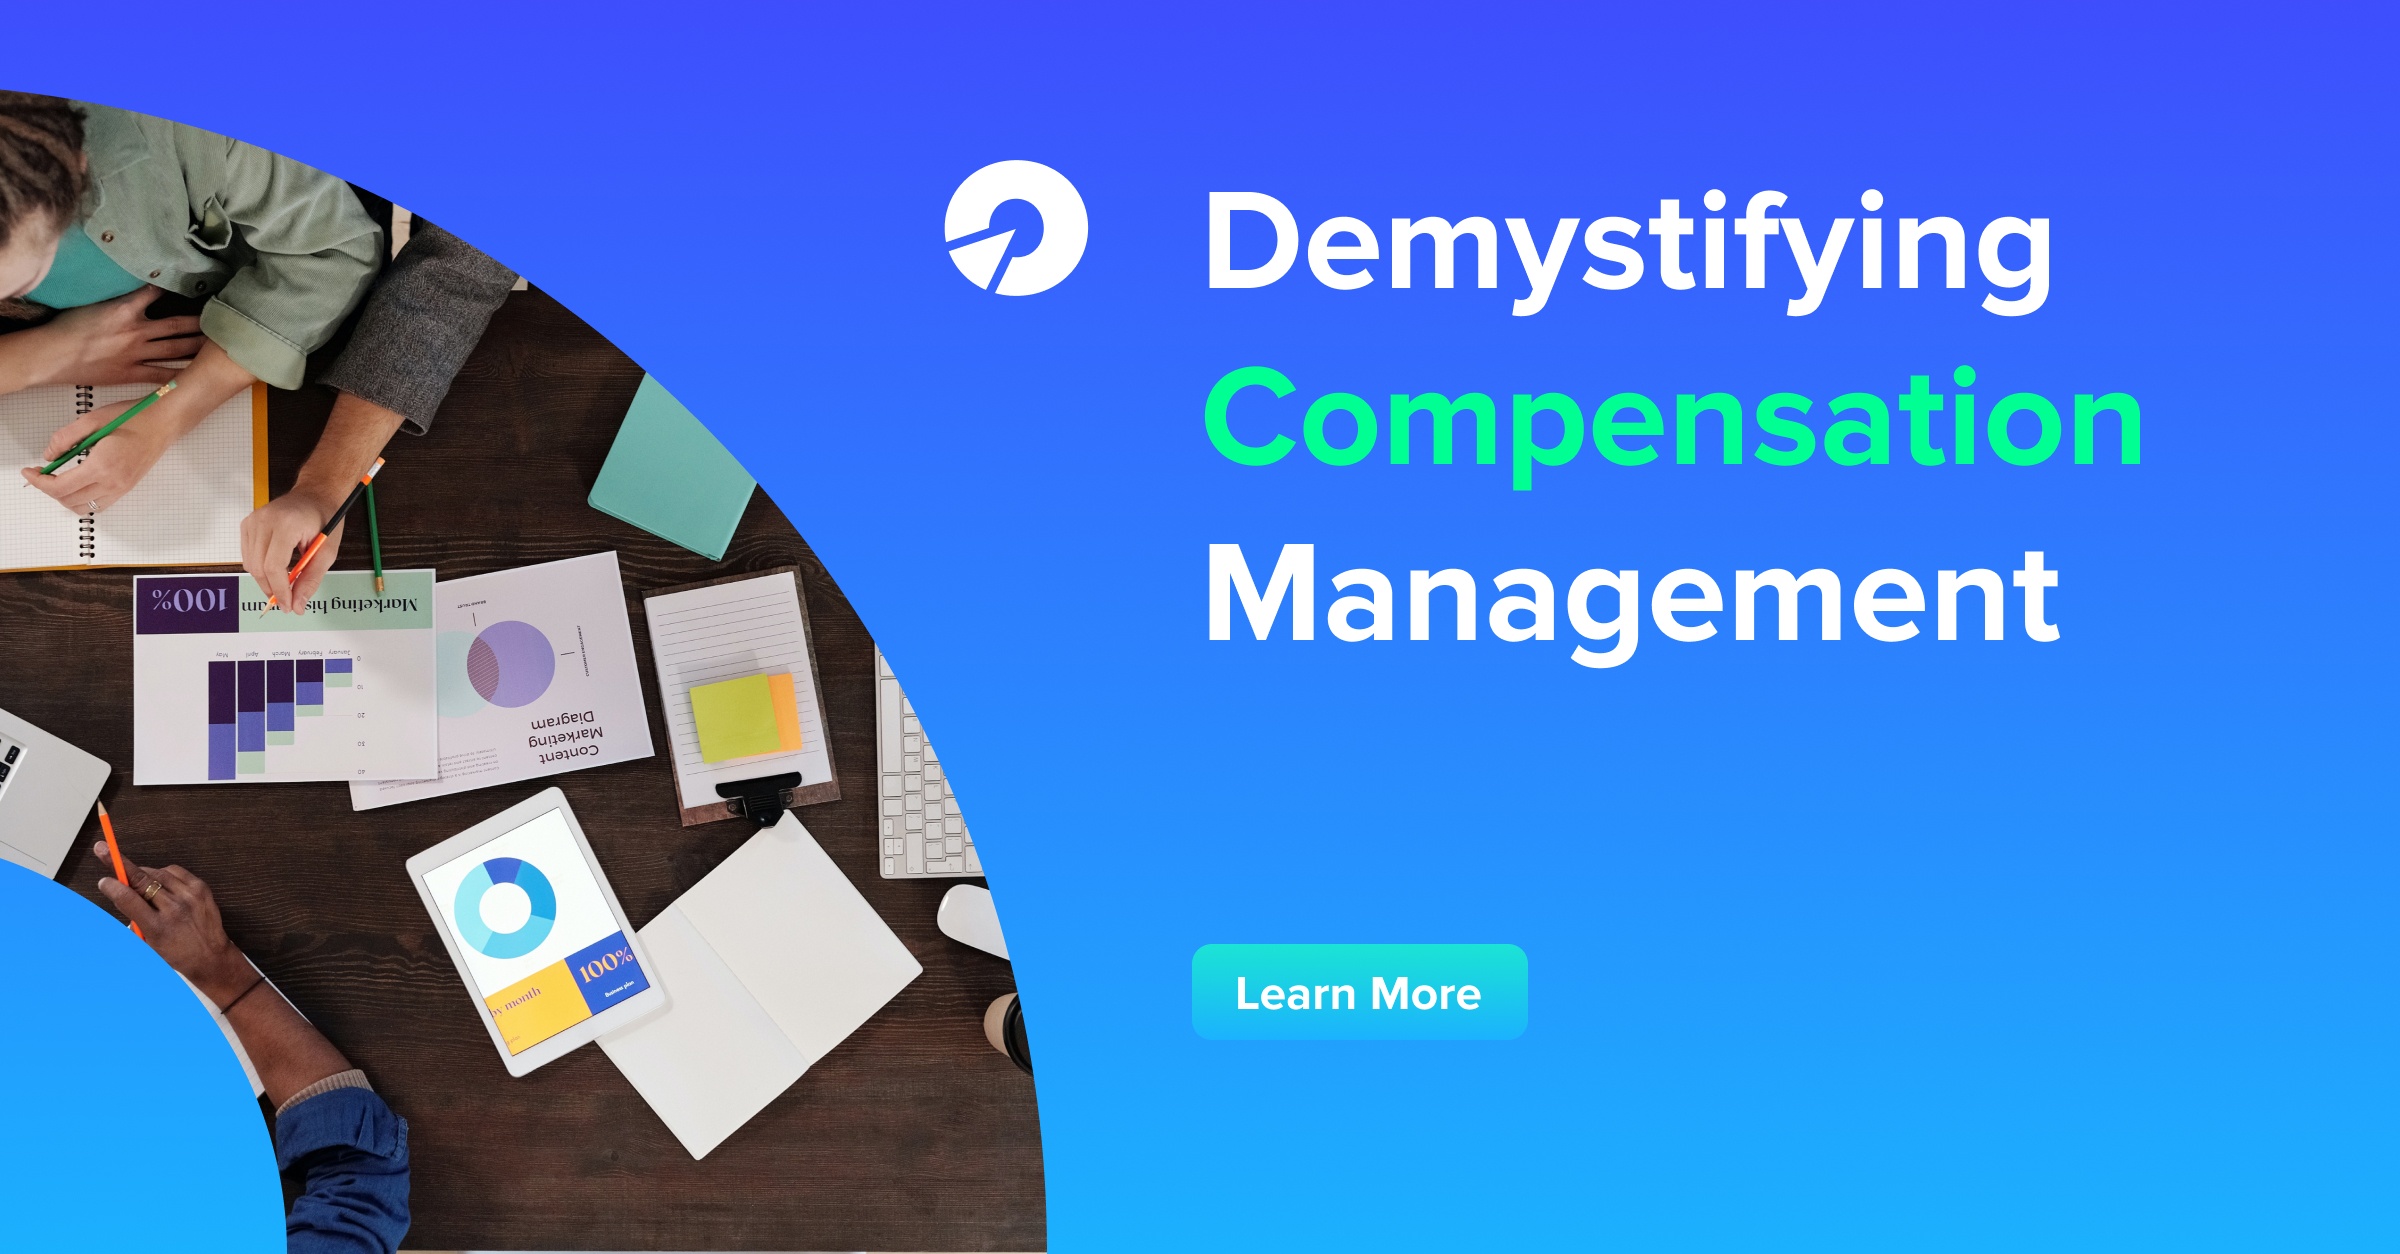 Demystifying Compensation Management